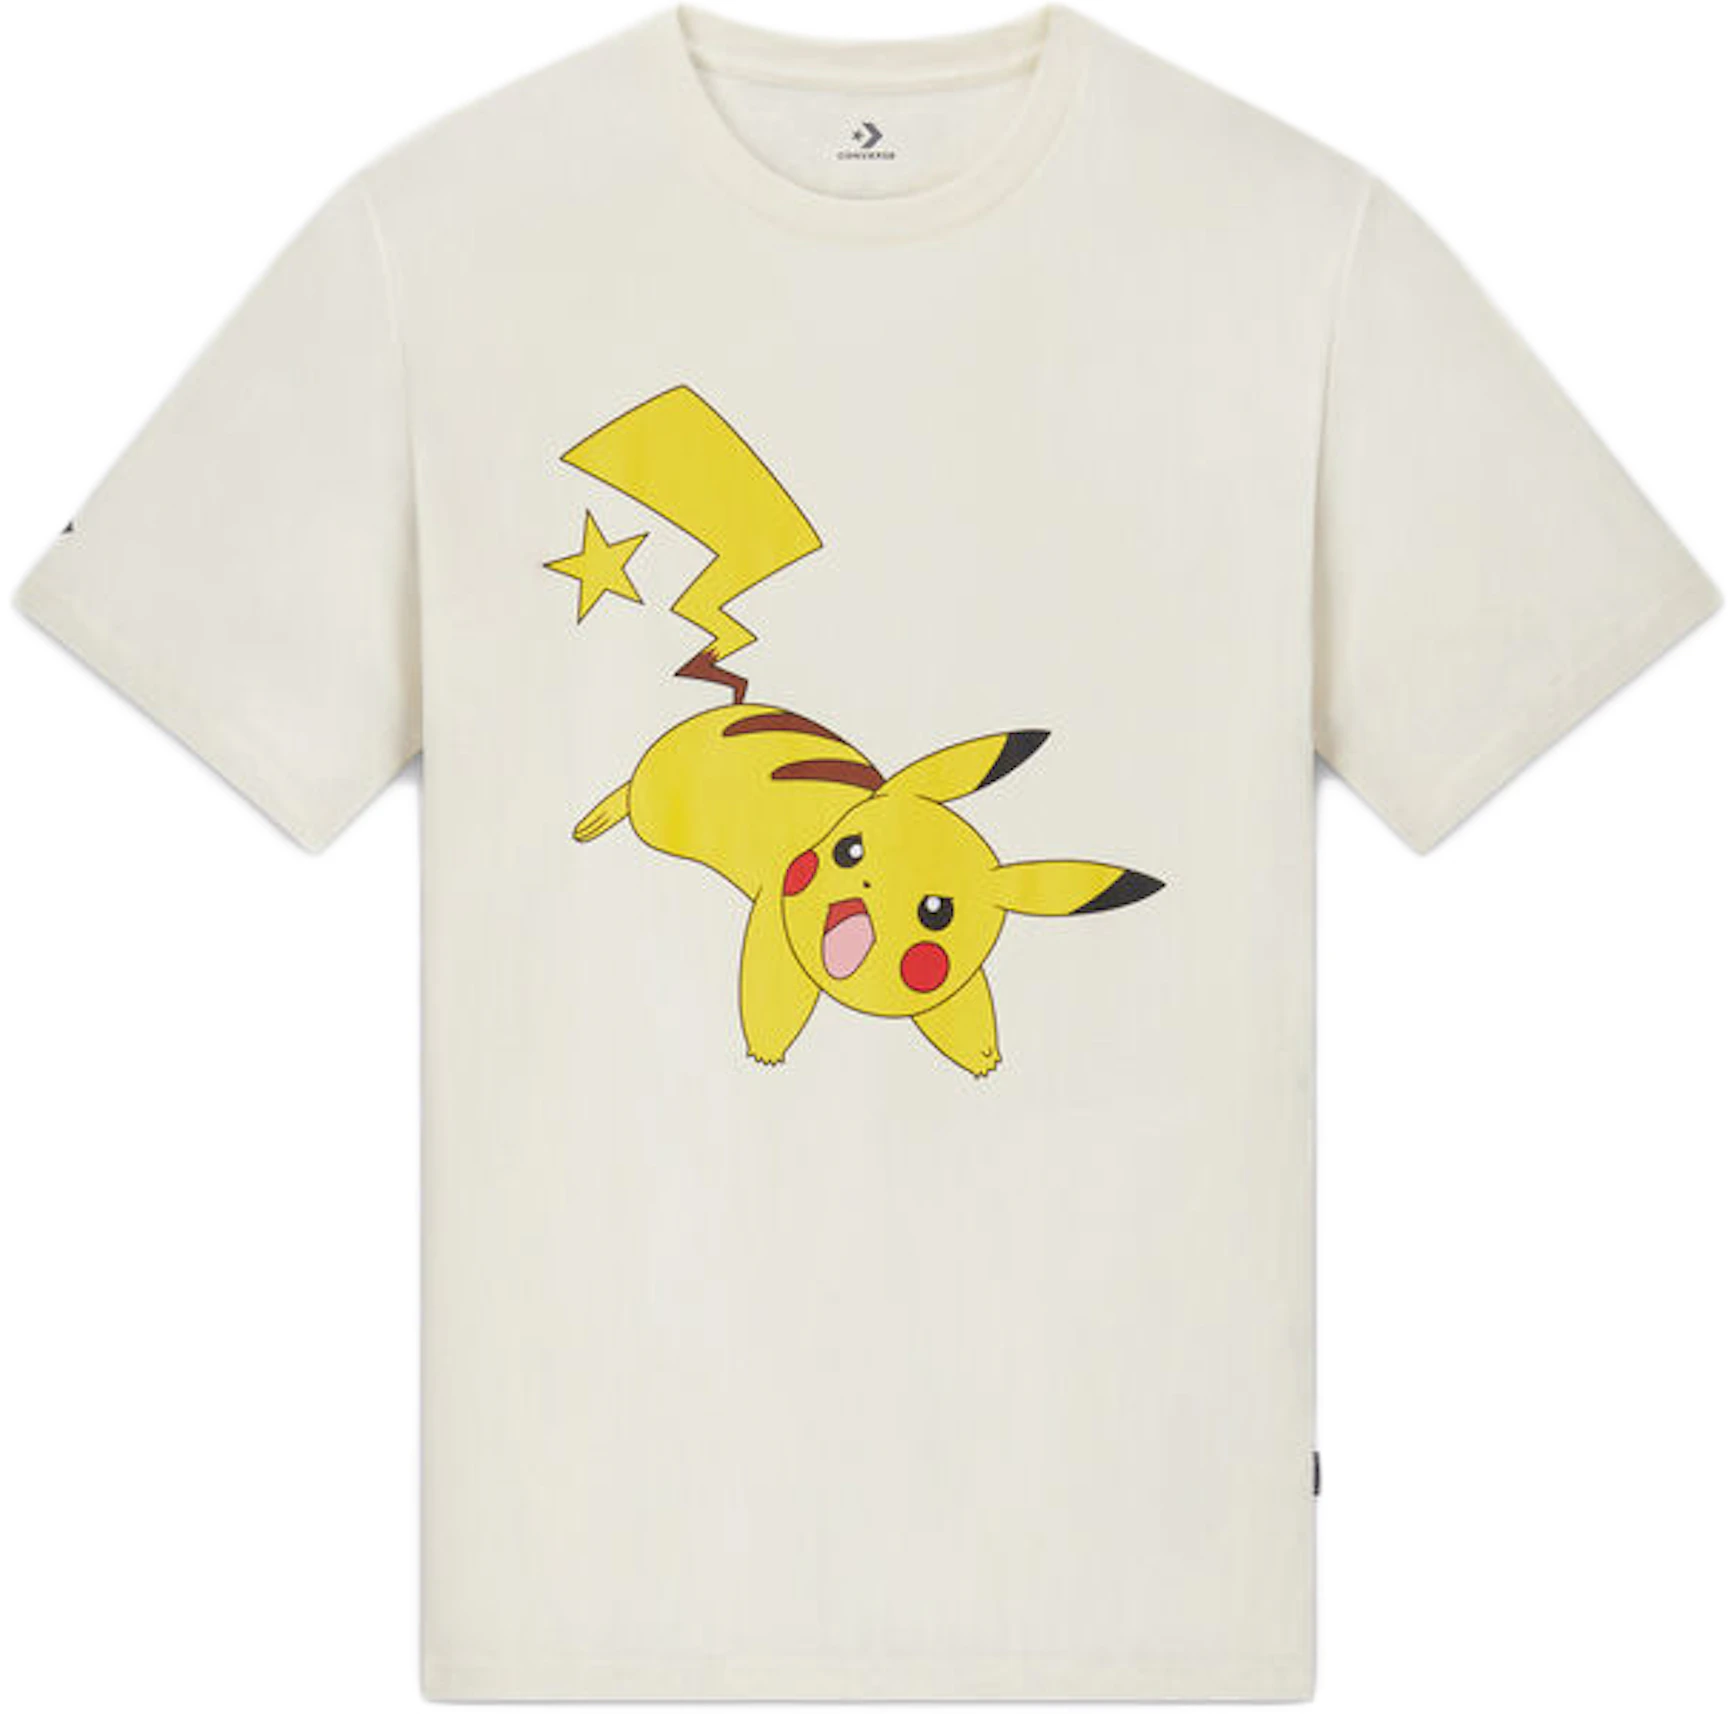 Converse x Pokemon T-Shirt White - FW21 - US